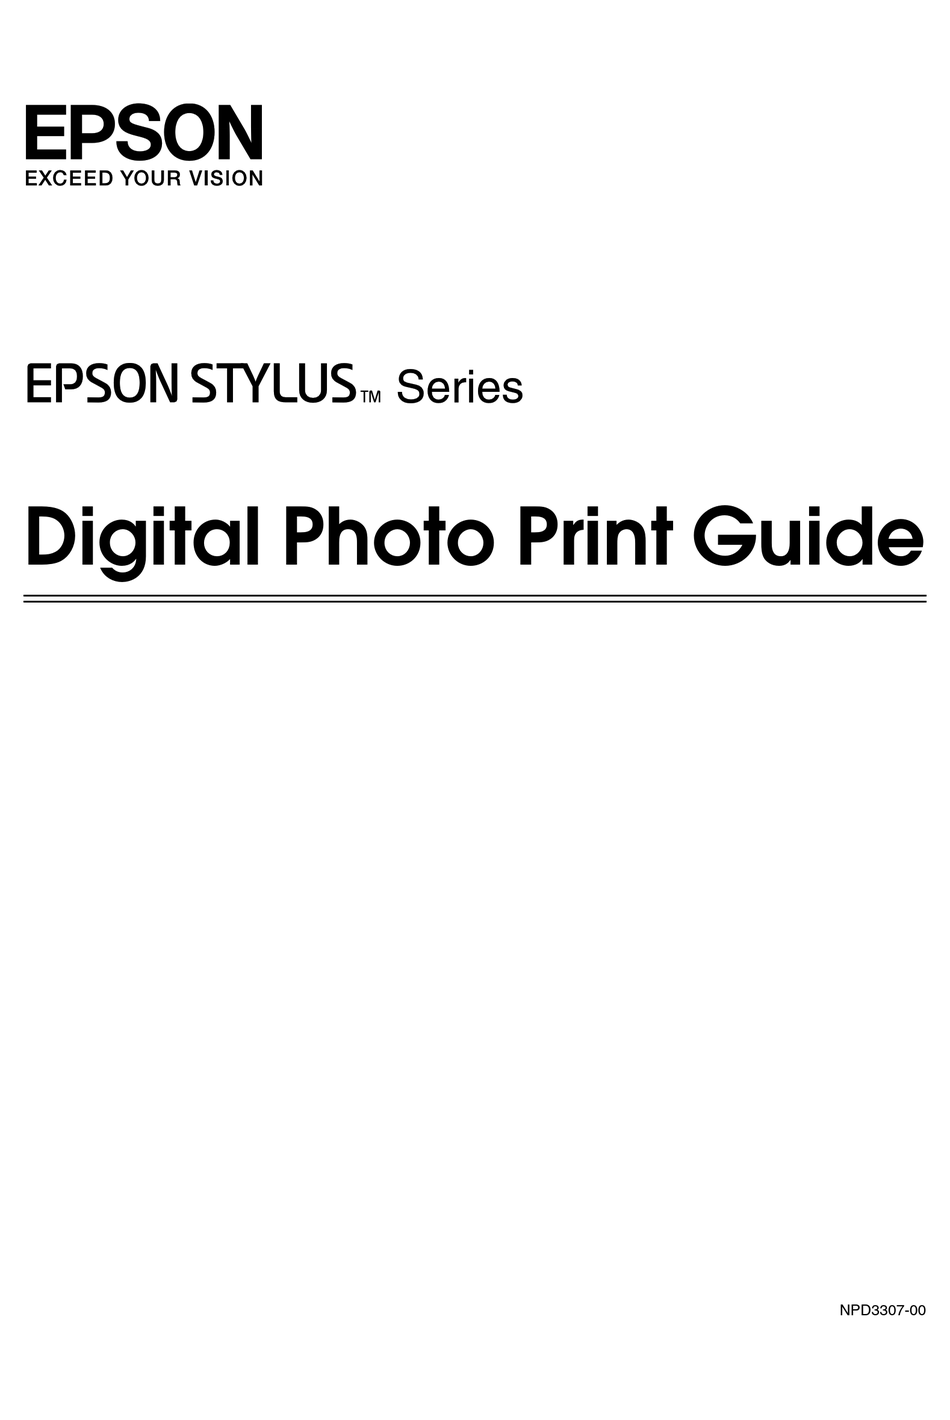 Epson Stylus Series Manual Pdf Download Manualslib 7302